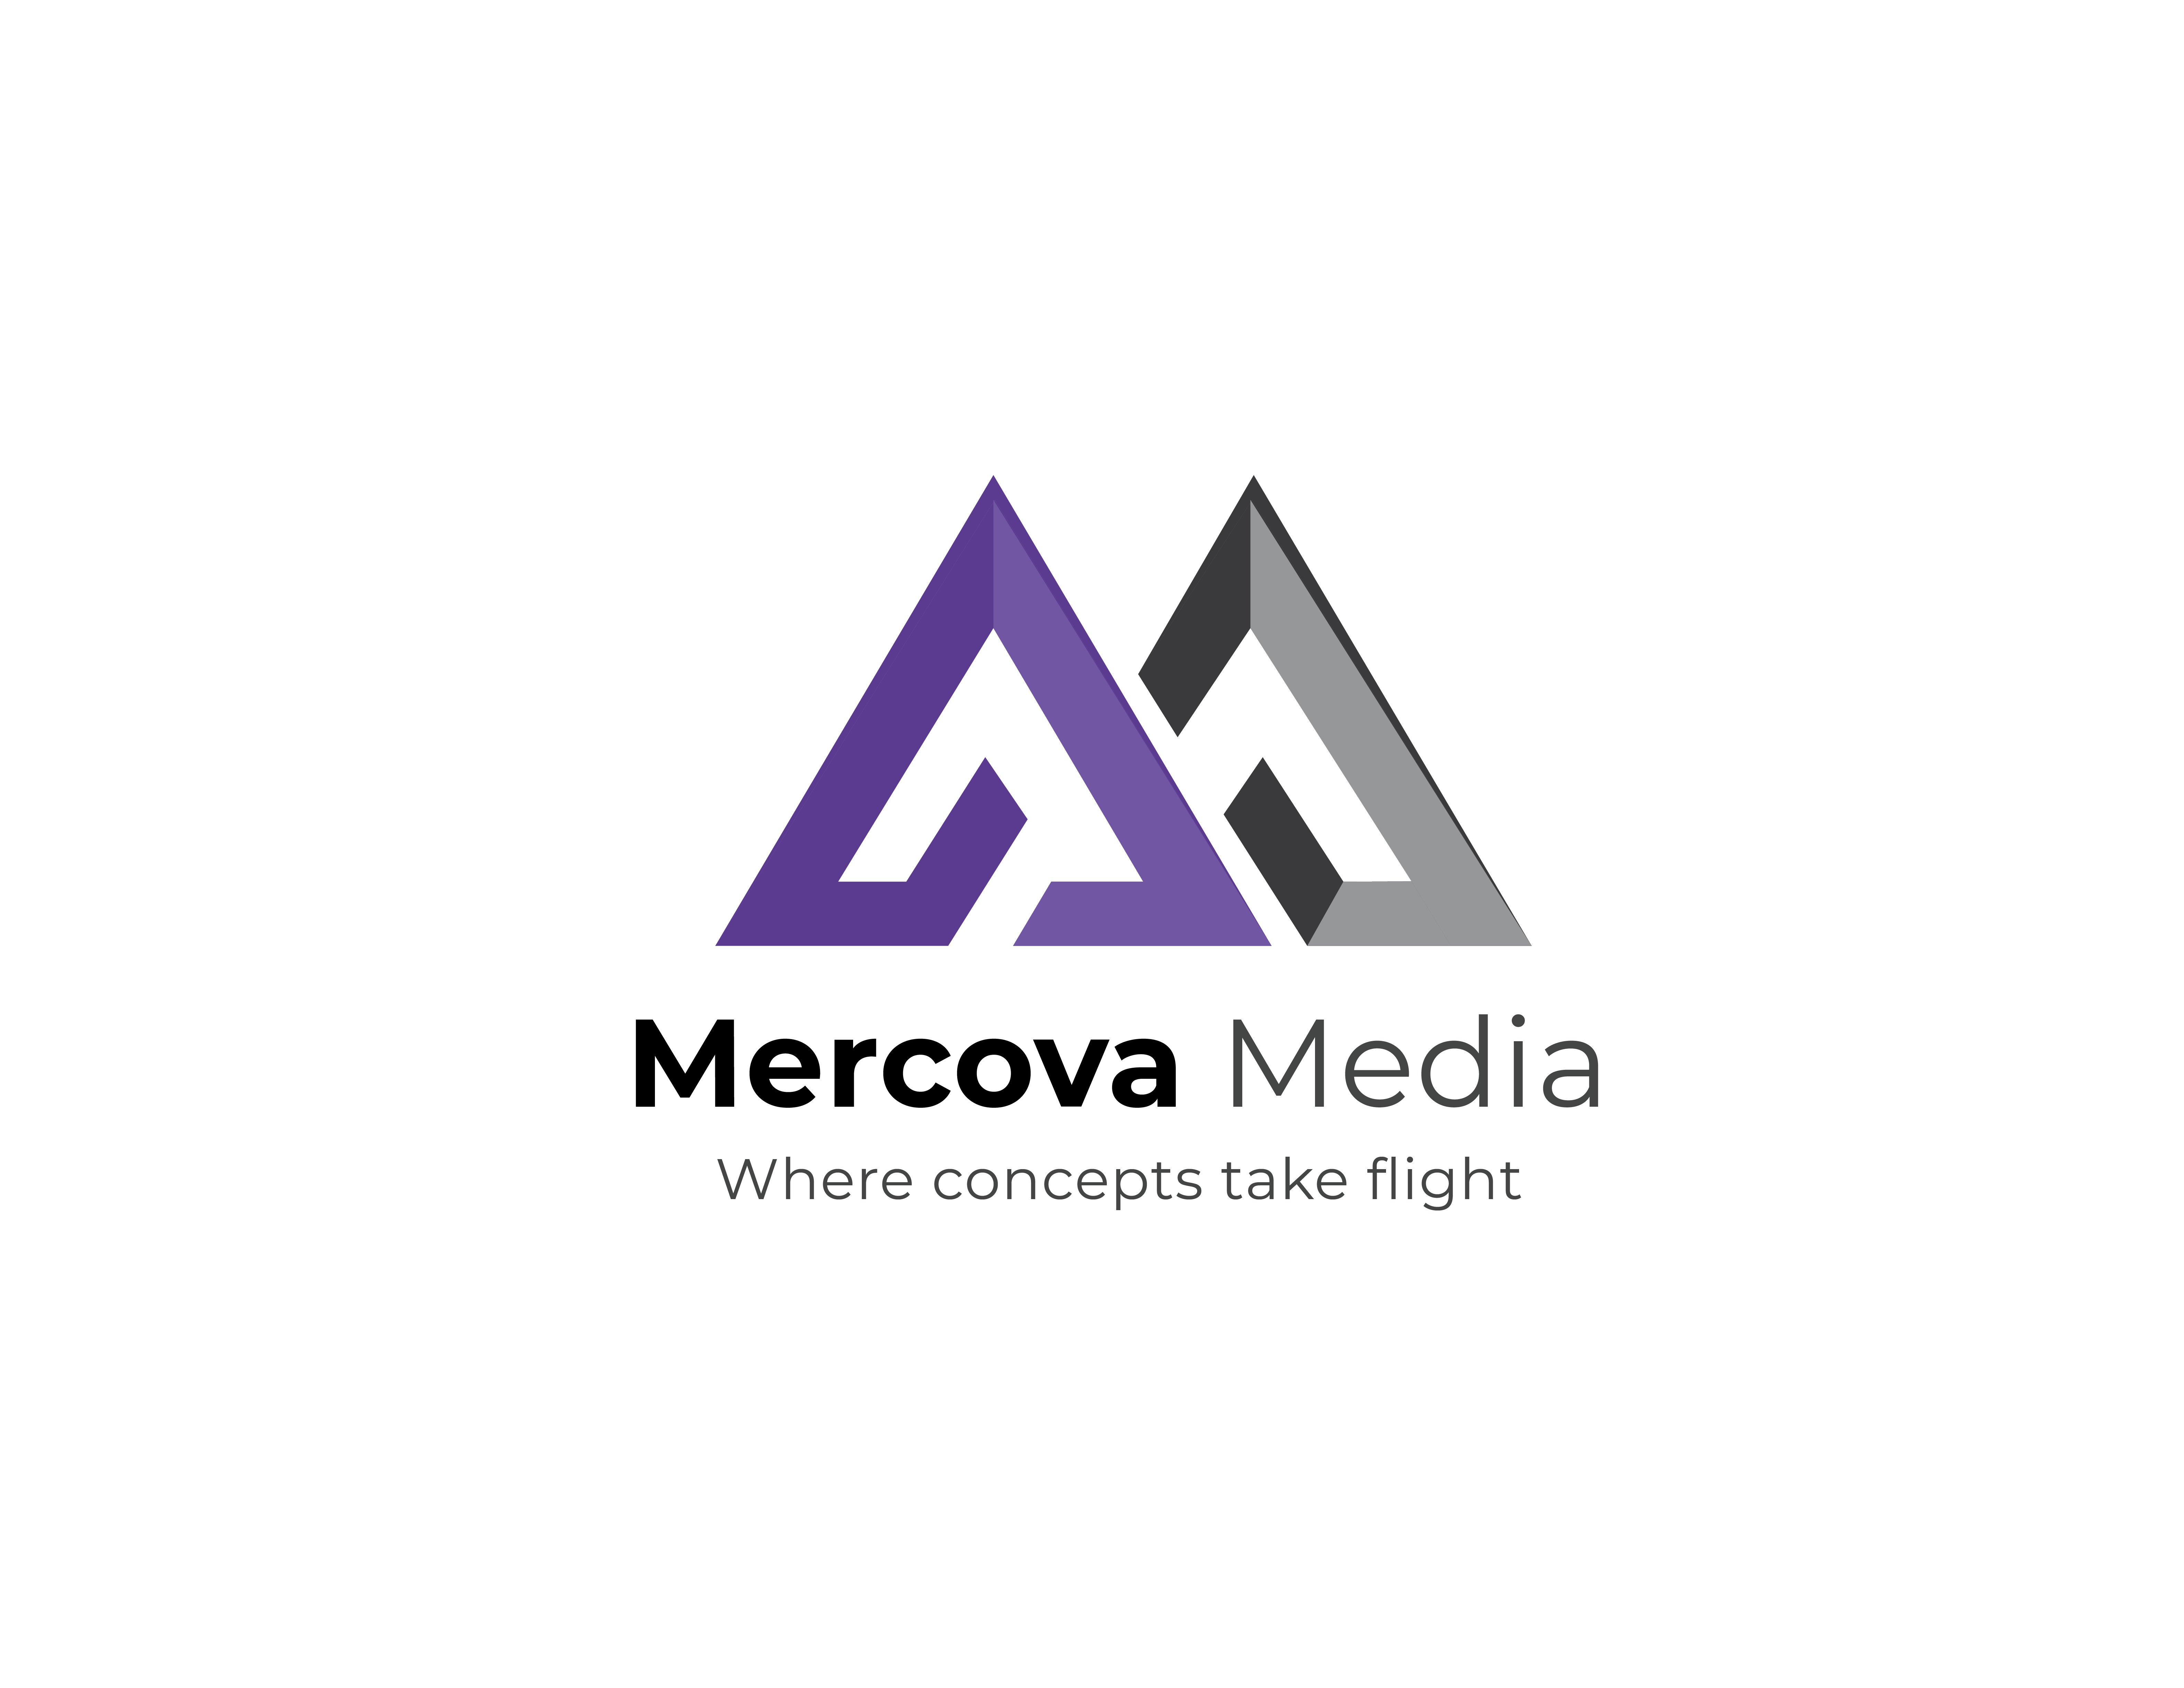 Mercova Media LLC profile on Qualified.One